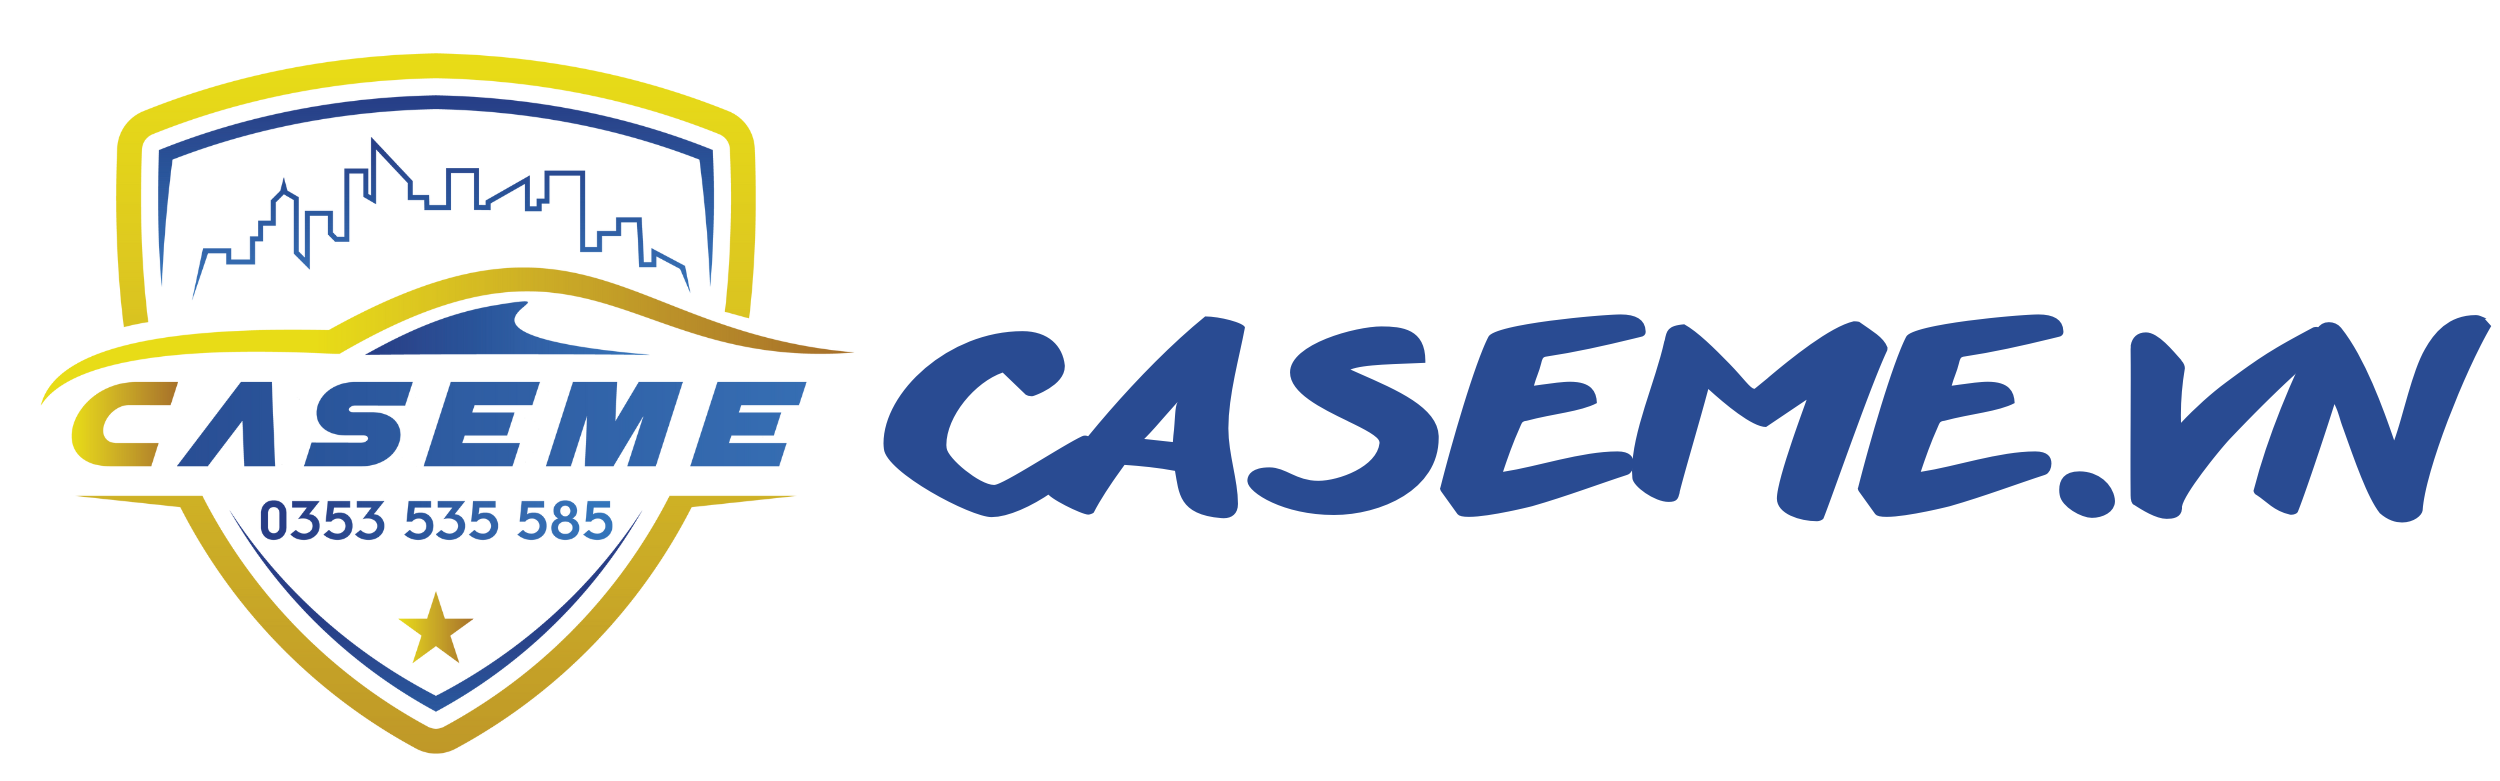 Phụ kiện Caseme.vn - 0353535585